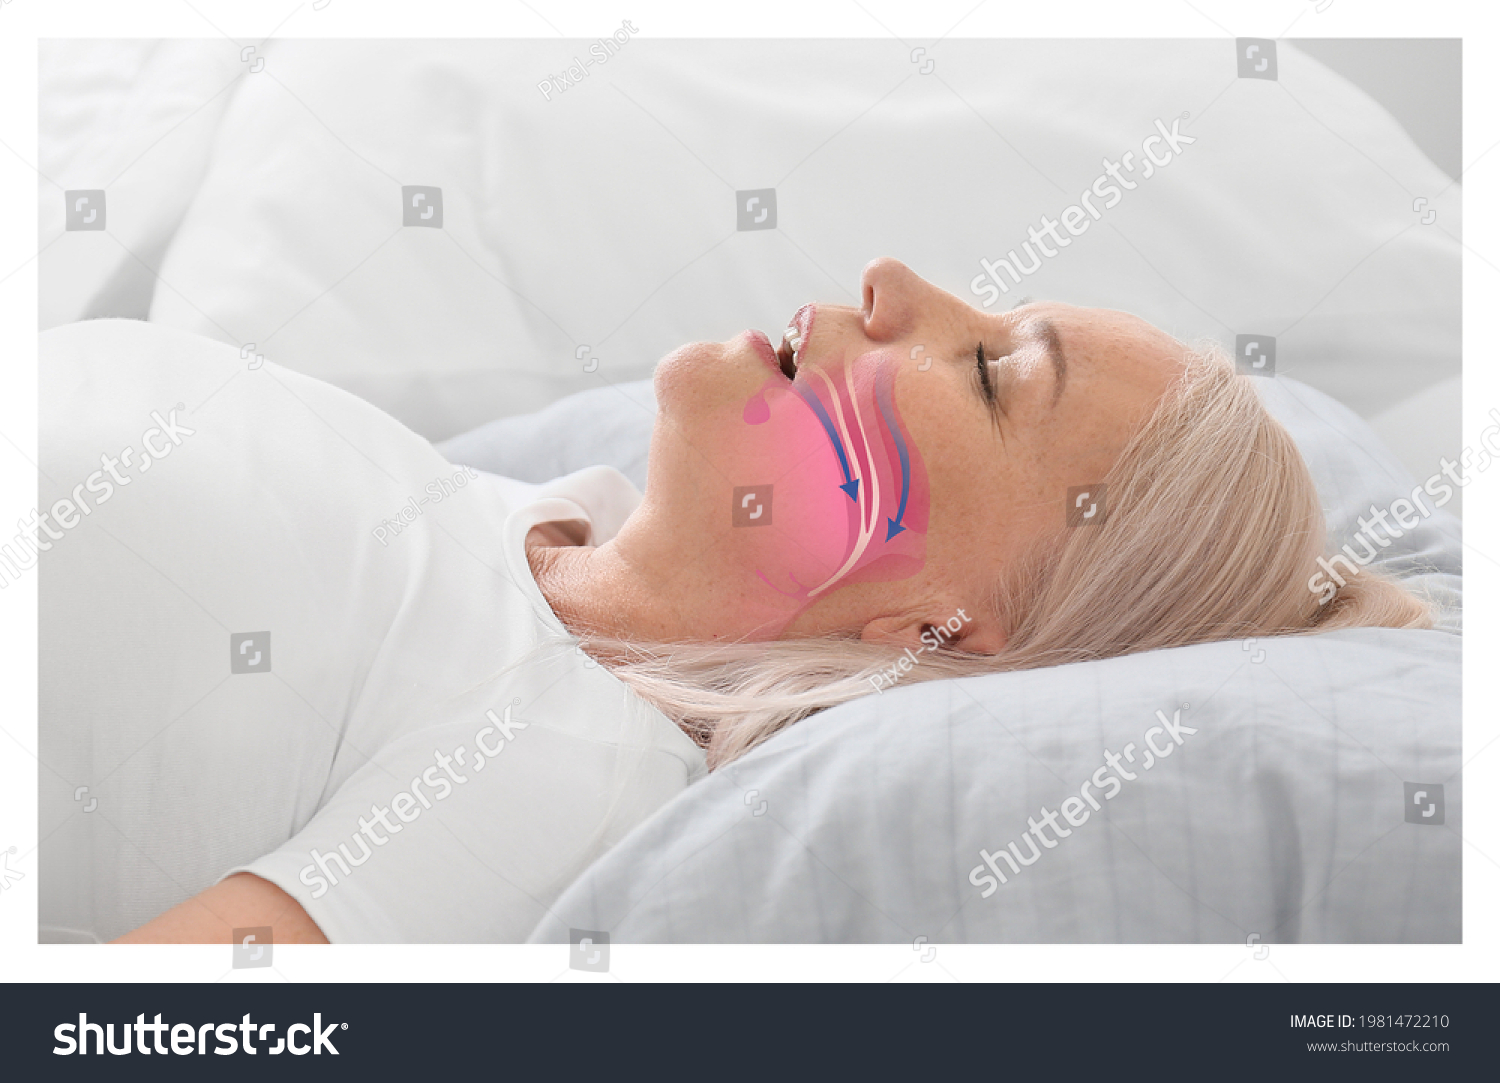 Illustration showing airway during obstructive sleep apnea #1981472210